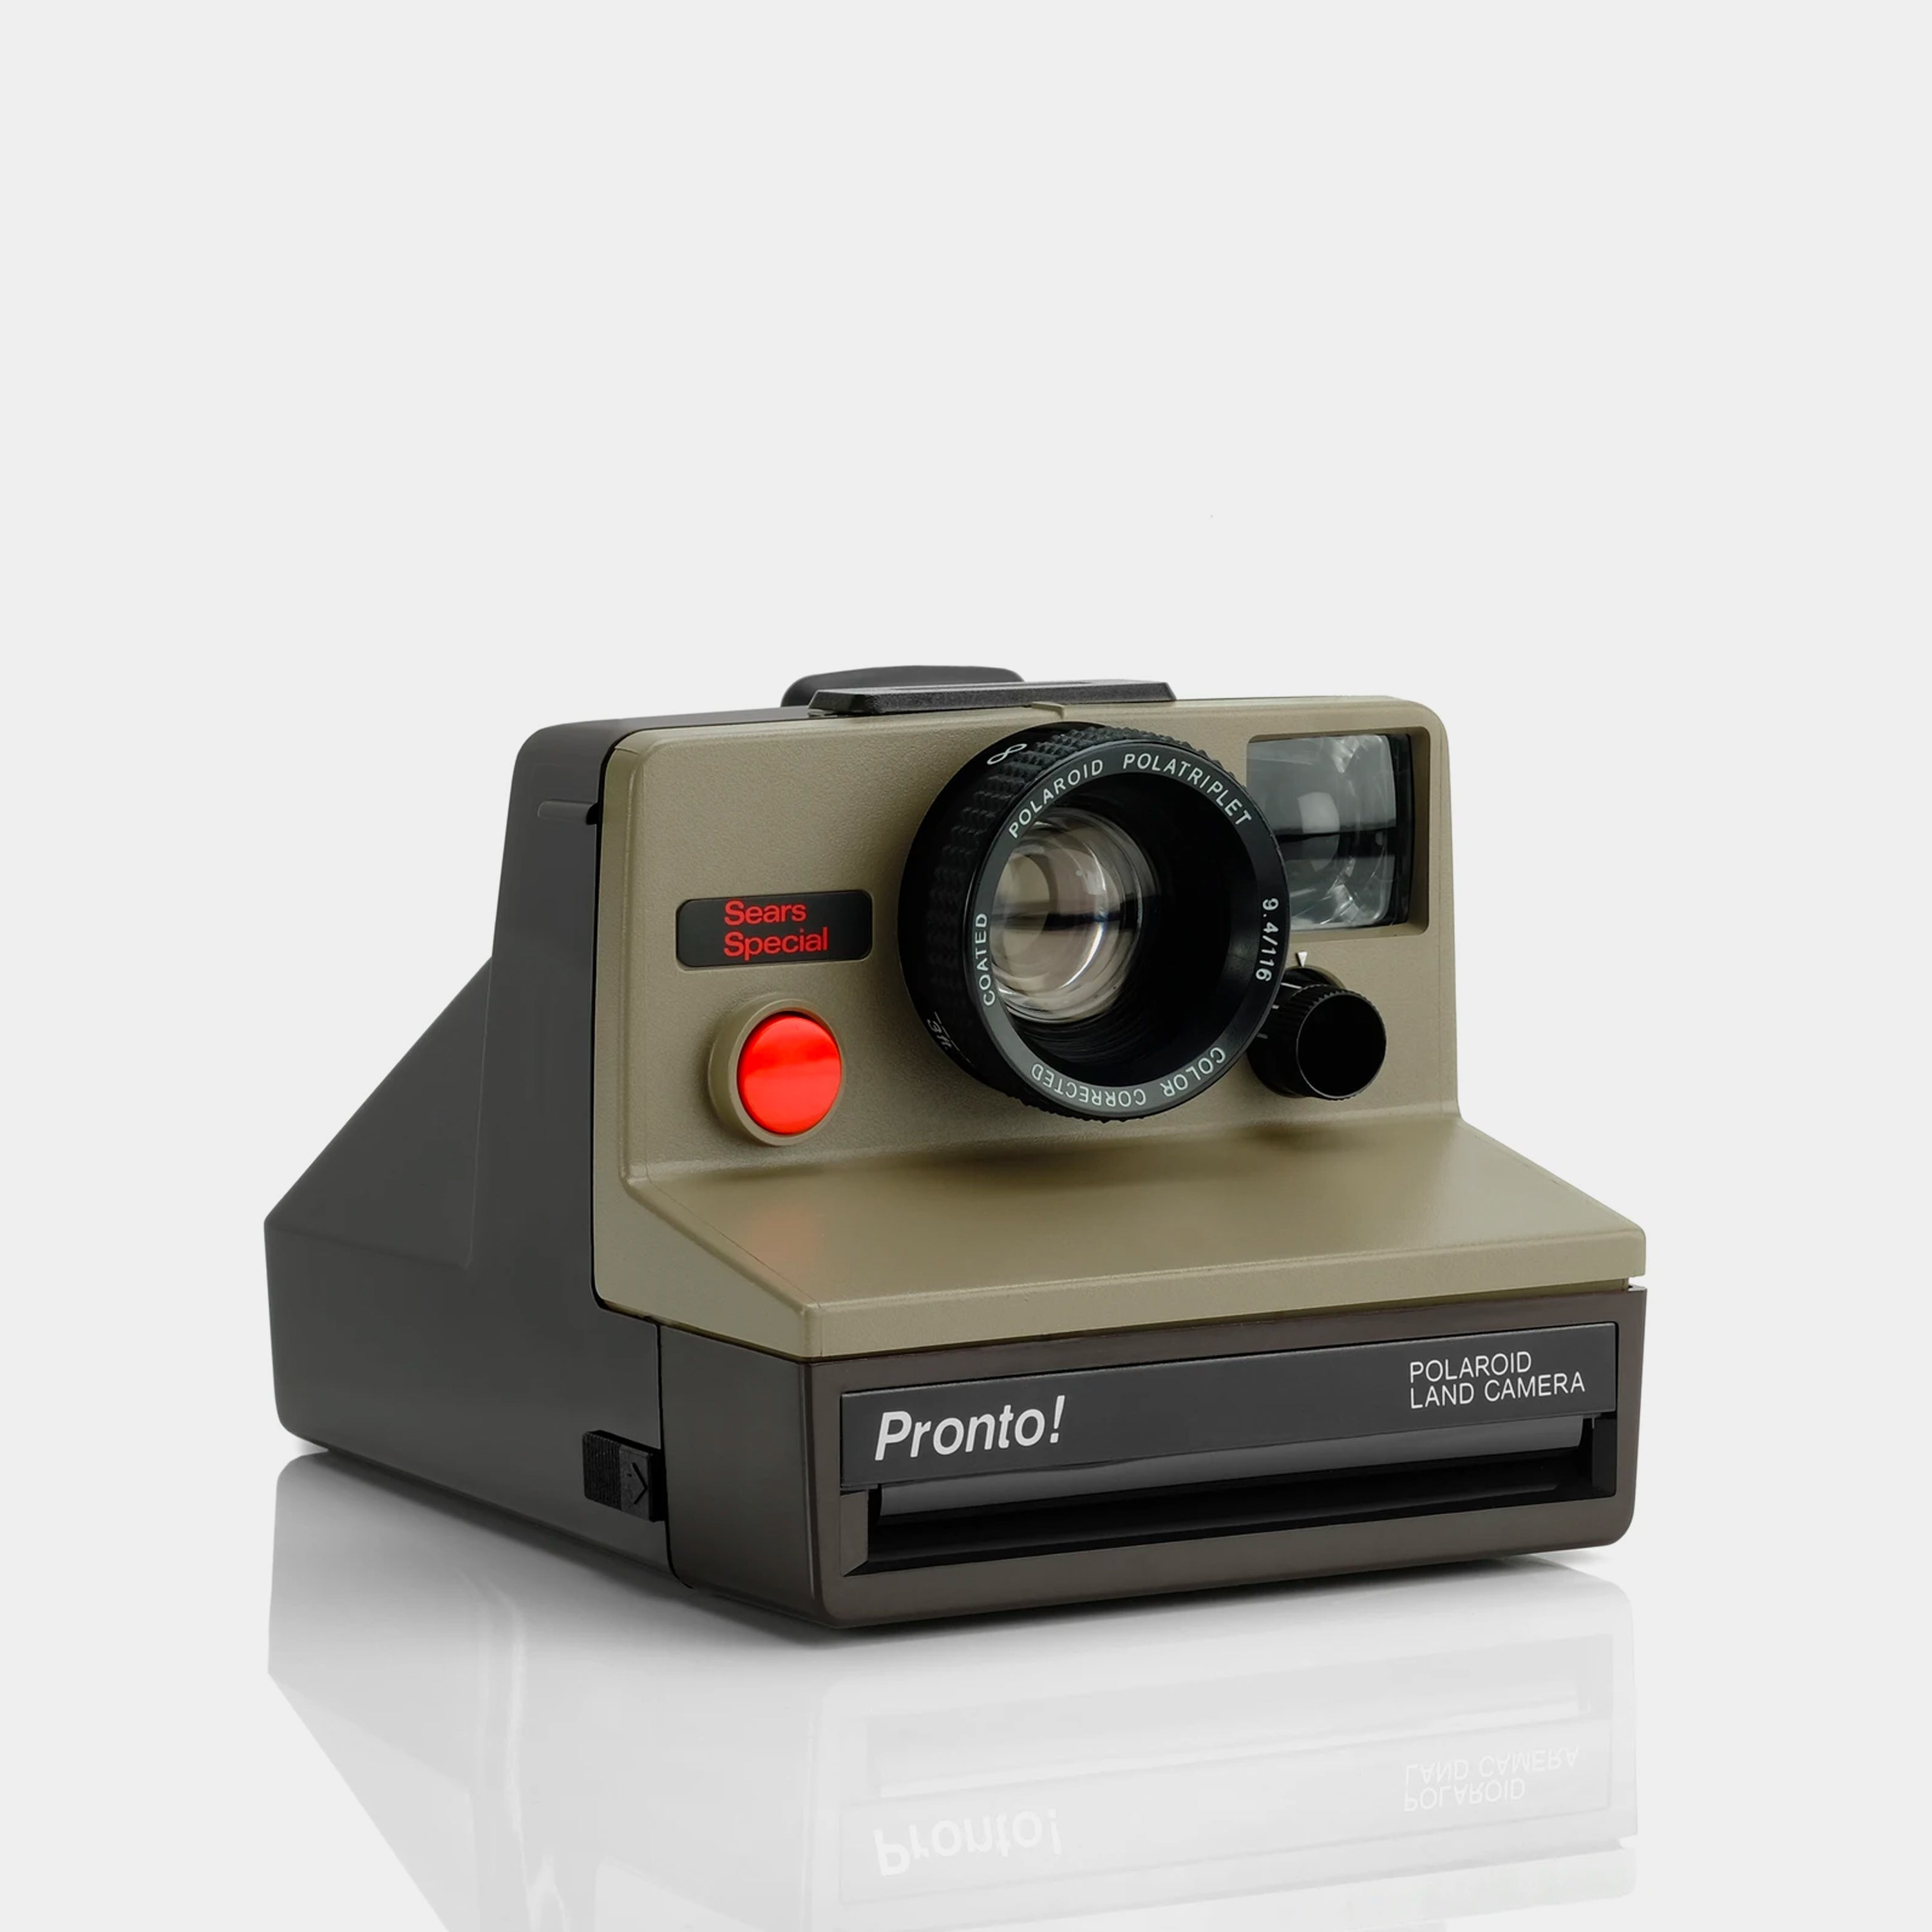 Polaroid SX-70 Pronto! Sears Special Instant Film Camera